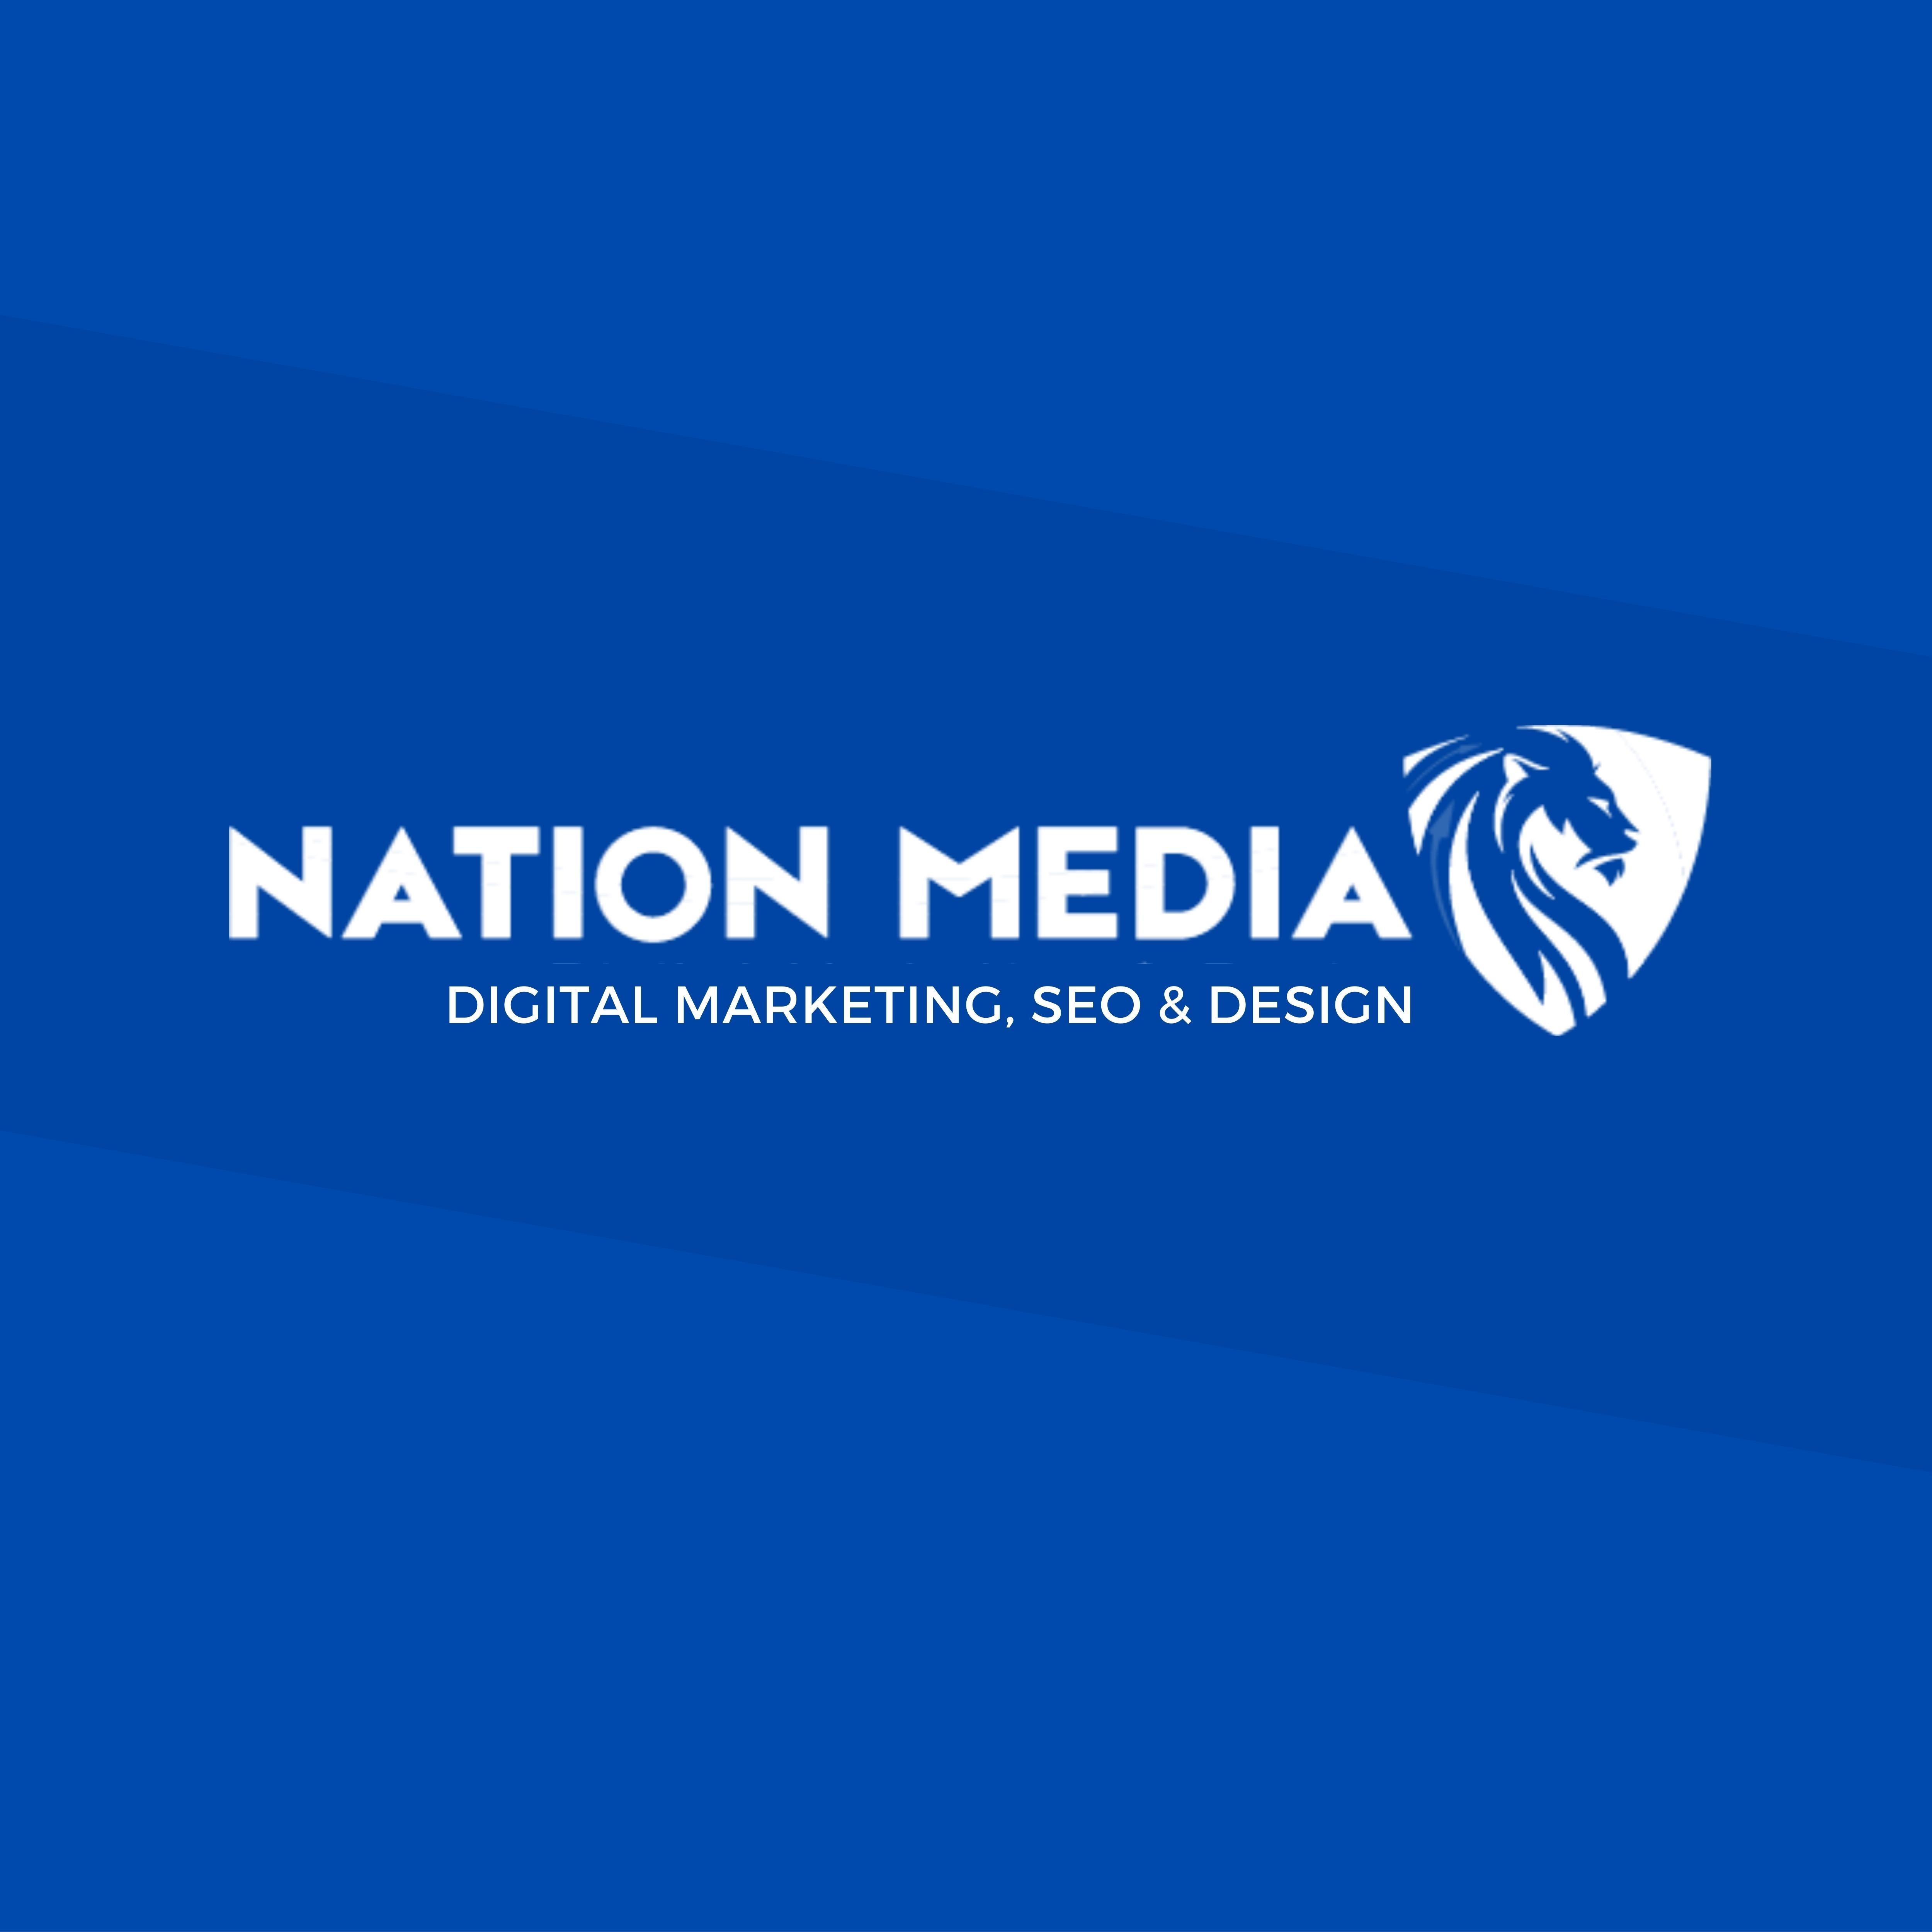 Nation Media - Digital Marketing, SEO & Design Agency